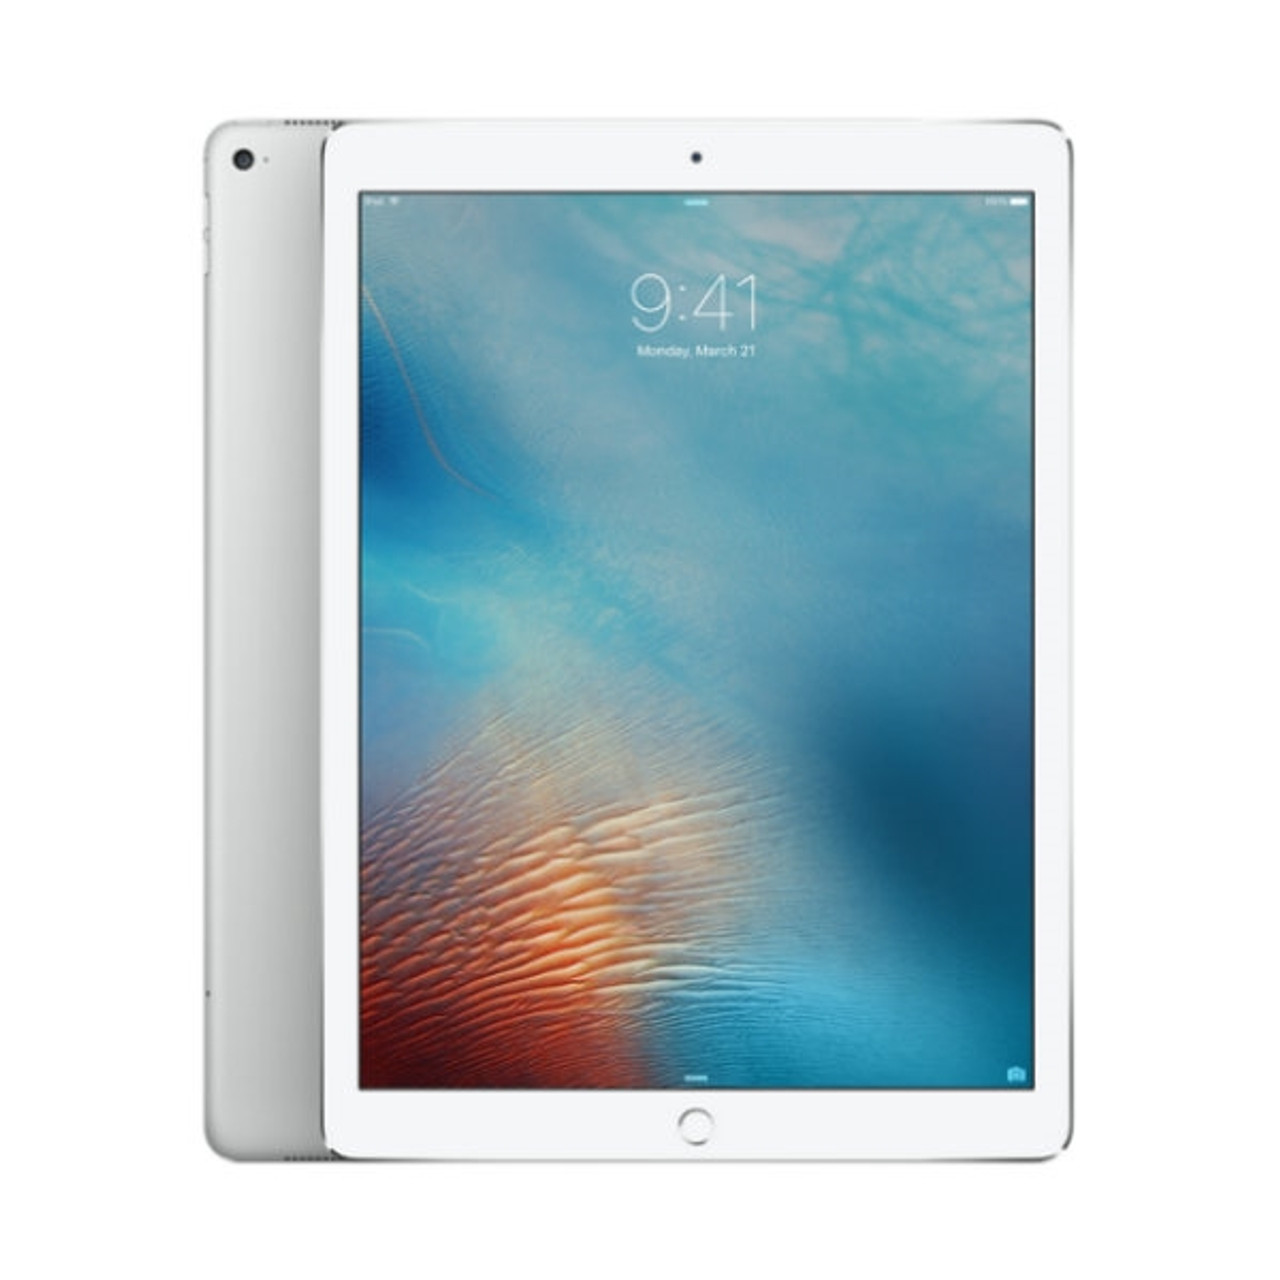 Apple iPad Pro 12.9-inch Wi-Fi + Cellular (Unlocked) 256GB - Silver  MPA52LL/A - Very Good Condition*